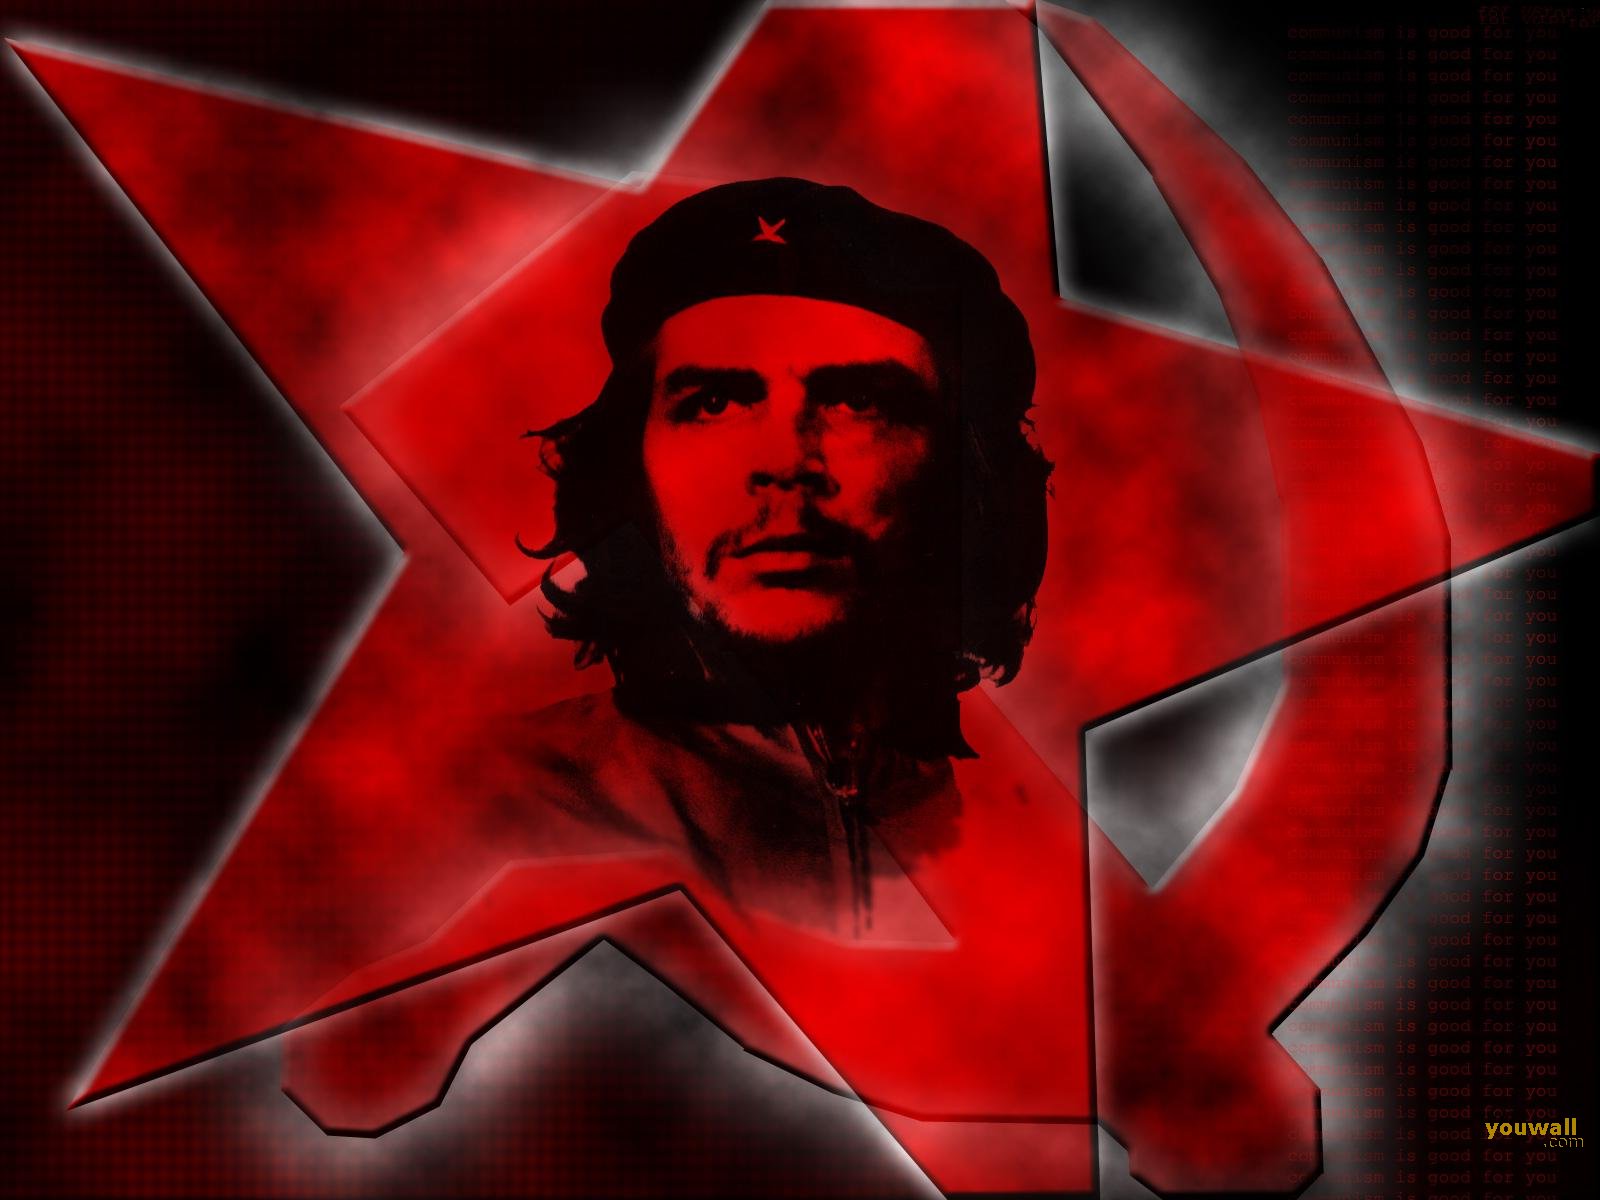 Youwall Che Guevara Wallpaper